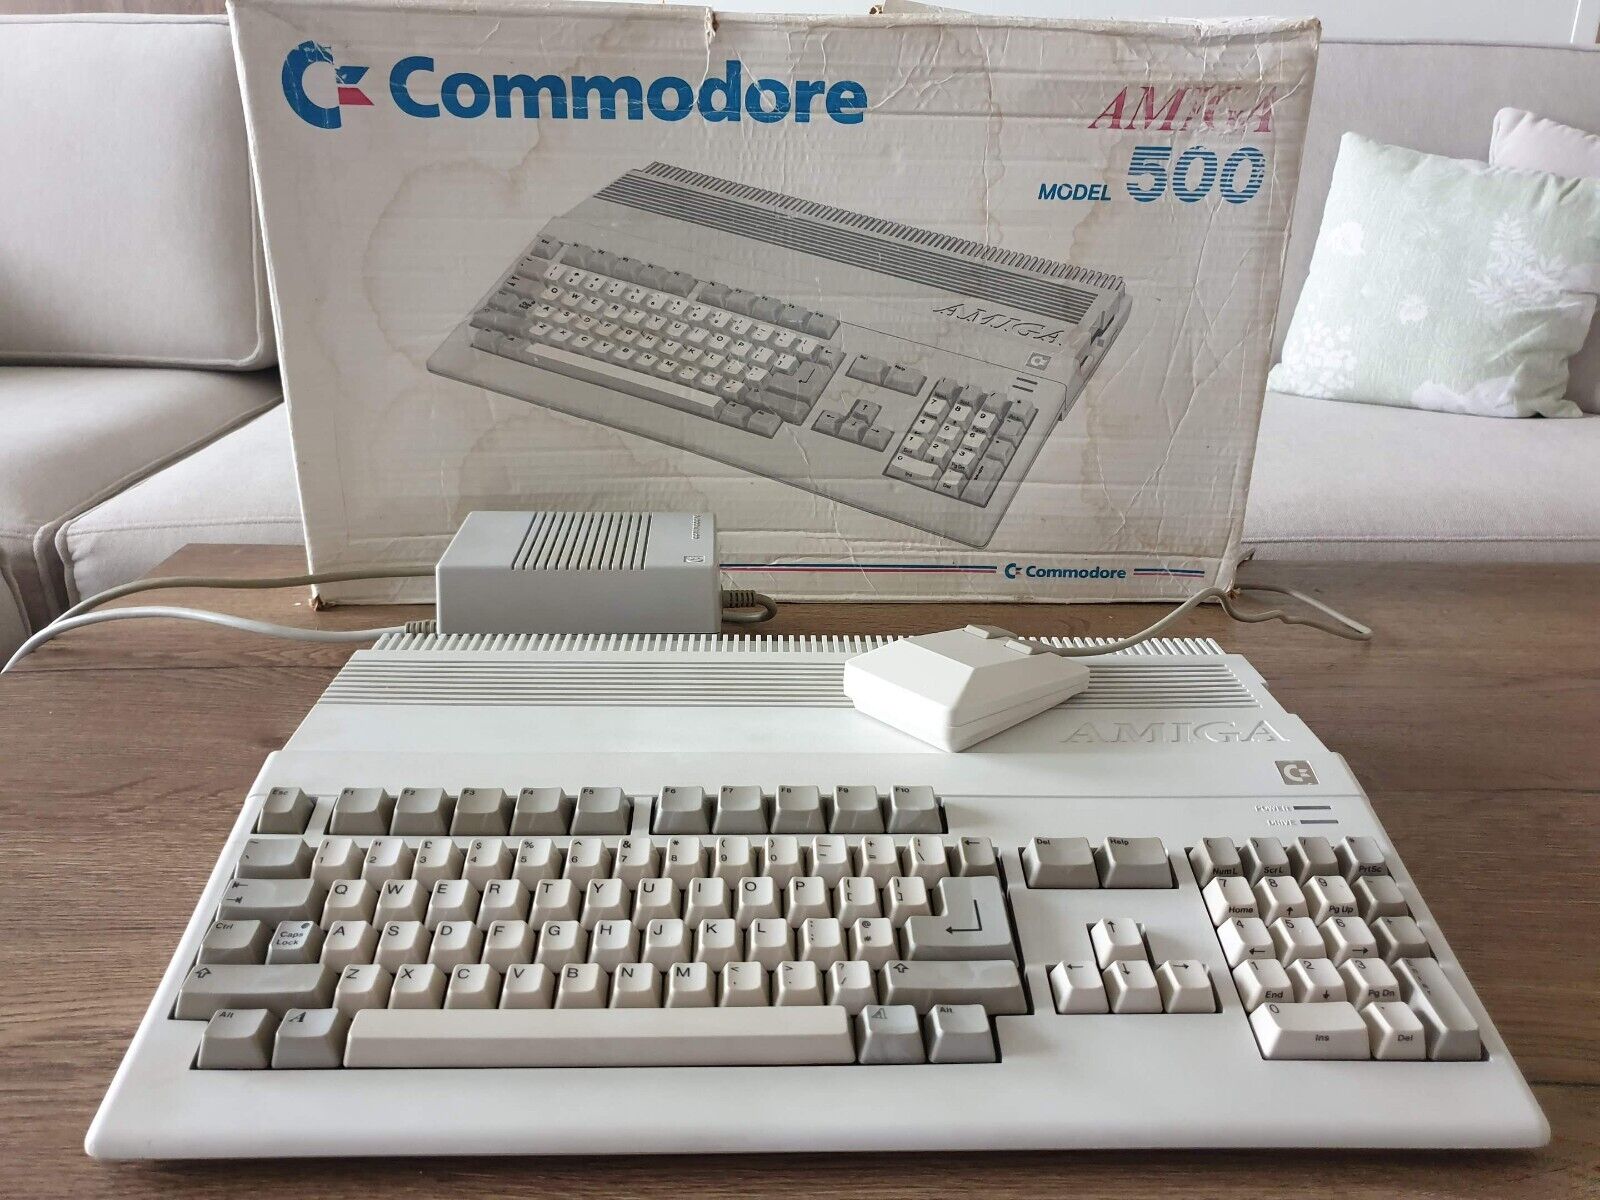 Commodore Amiga 500 + tank mouse + power supply + original box